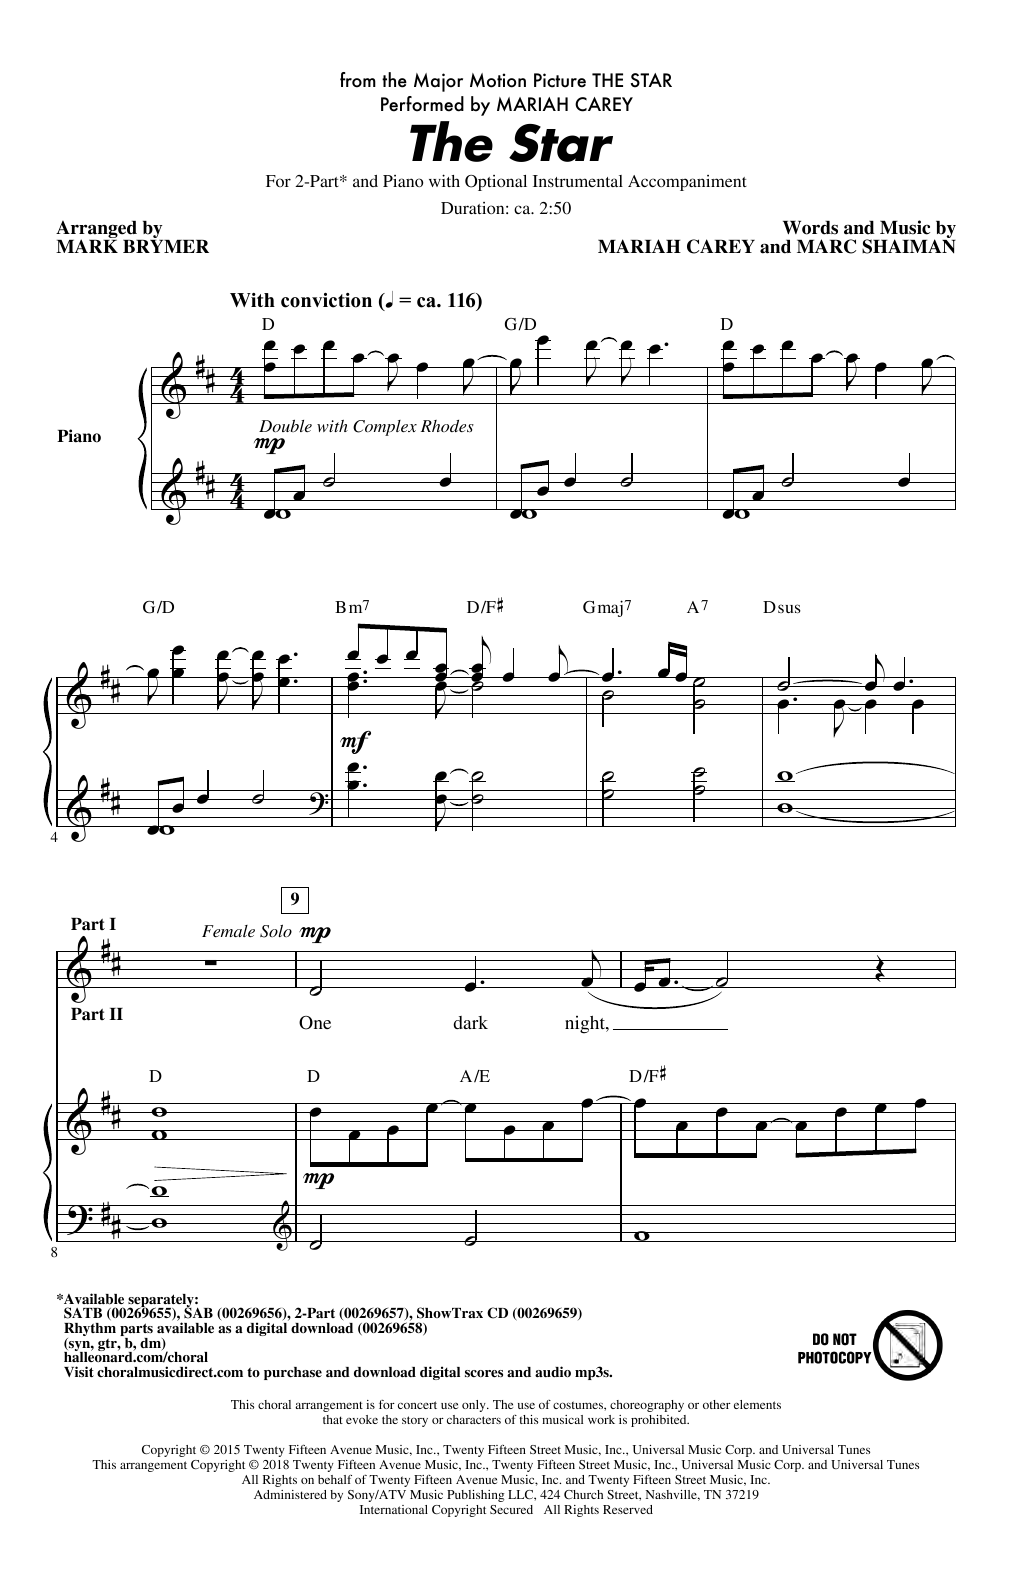 Mariah Carey The Star (arr. Mark Brymer) Sheet Music Notes & Chords for 2-Part Choir - Download or Print PDF